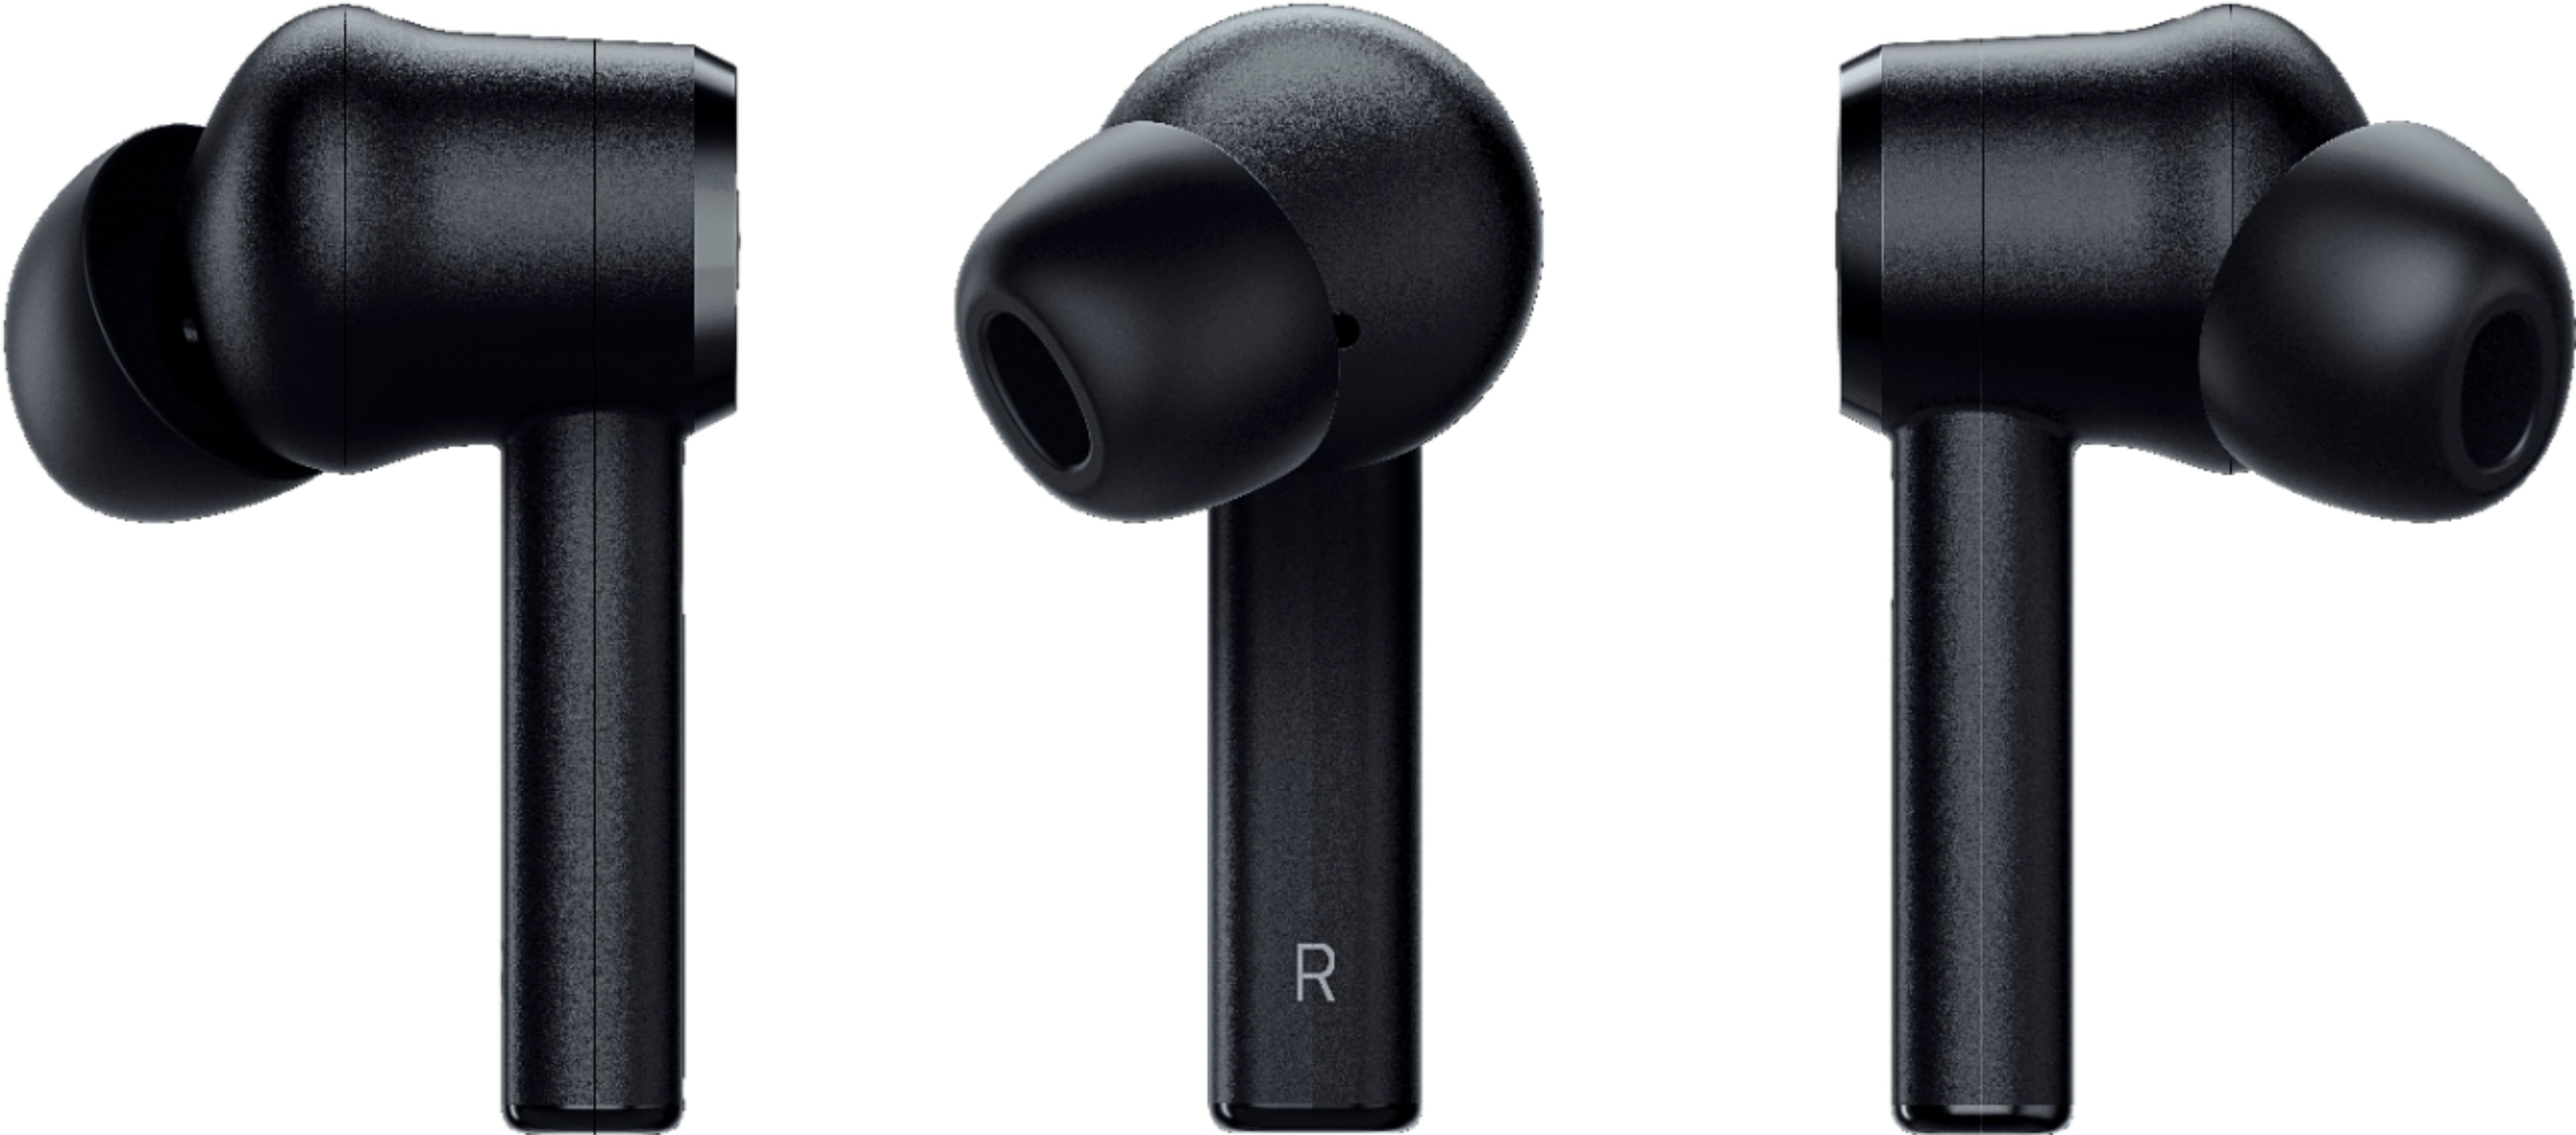 Razer Hammerhead True Wireless Pro Bluetooth Gaming Earbuds, Classic Black  & TP-Link USB Bluetooth Adapter for PC(UB400), 4.0 Bluetooth Dongle